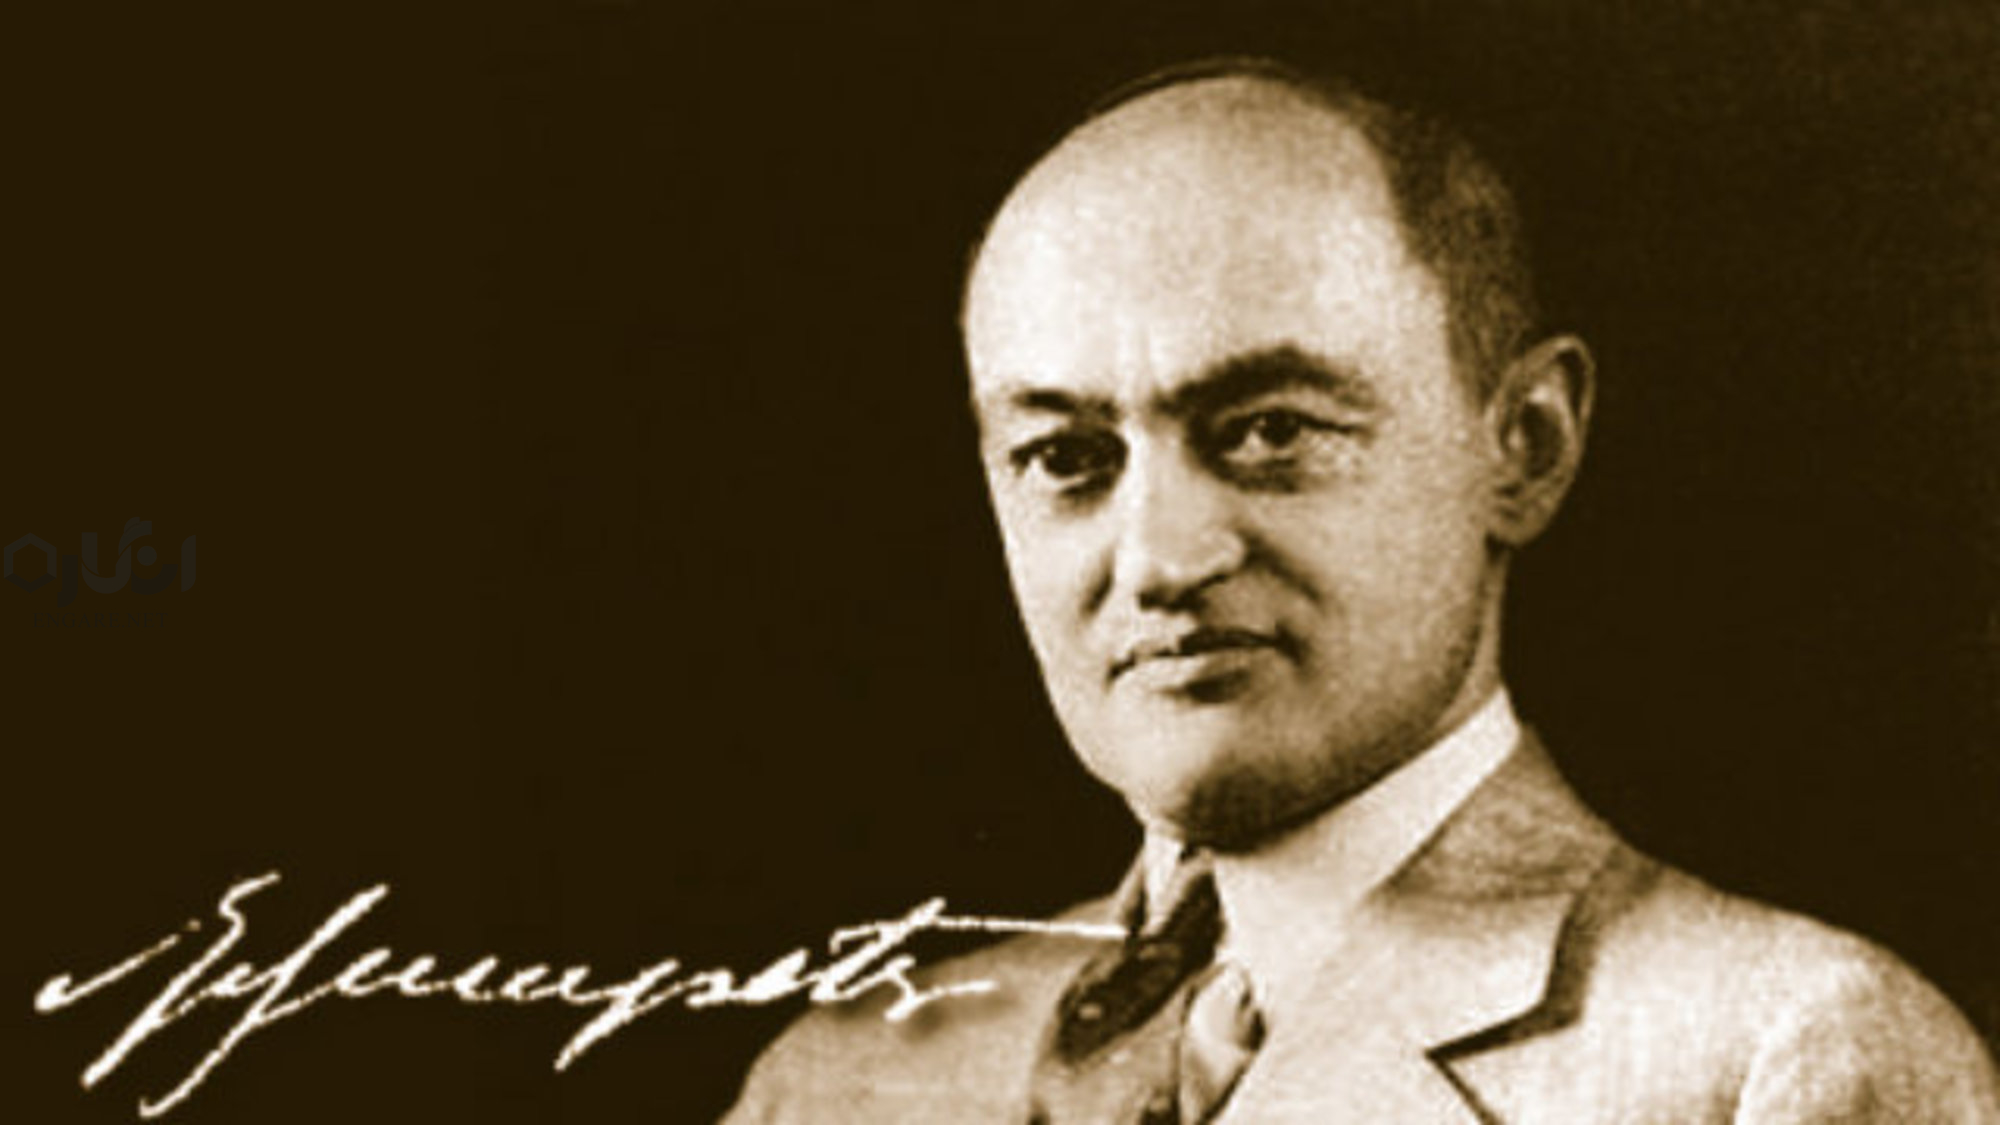 Joseph Schumpeter - تخریب خلاق - کاپیتالیسم, فرآیند تخریب خلاق, جوزف شومپیتر, تعریف تخریب خلاق, تخریب خلاقانه شومپیتر, تخریب خلاقانه, تخریب خلاق یعنی چه, تخریب خلاق شومپیتری, تخریب خلاق در کارآفرینی, تخریب خلاق چیست, تخریب خلاق, تخريب خلاقانه